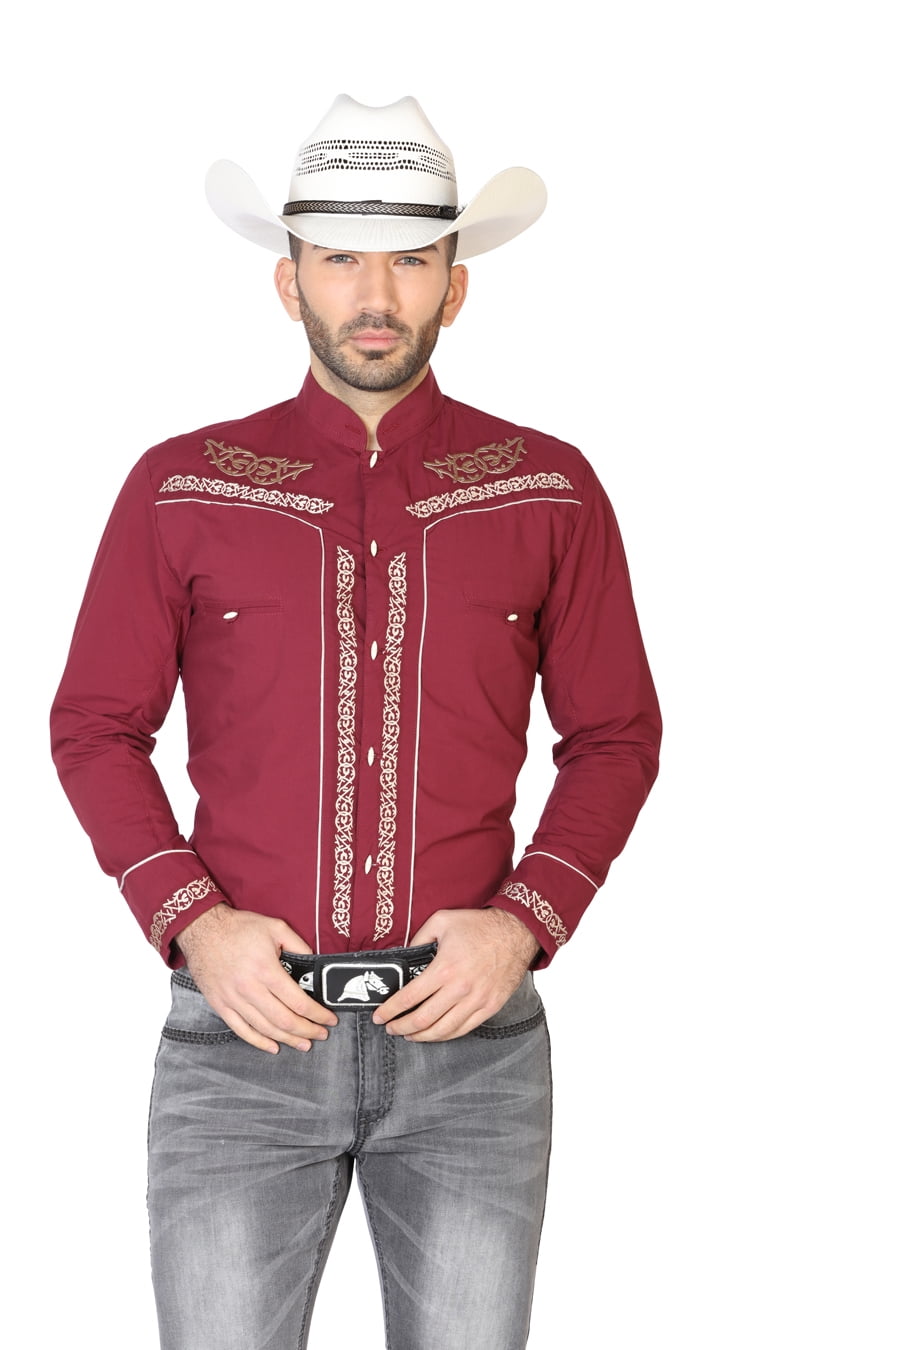 Men's Charro Shirt Camisa Charra El General Western Wear Red Long Sleeve 